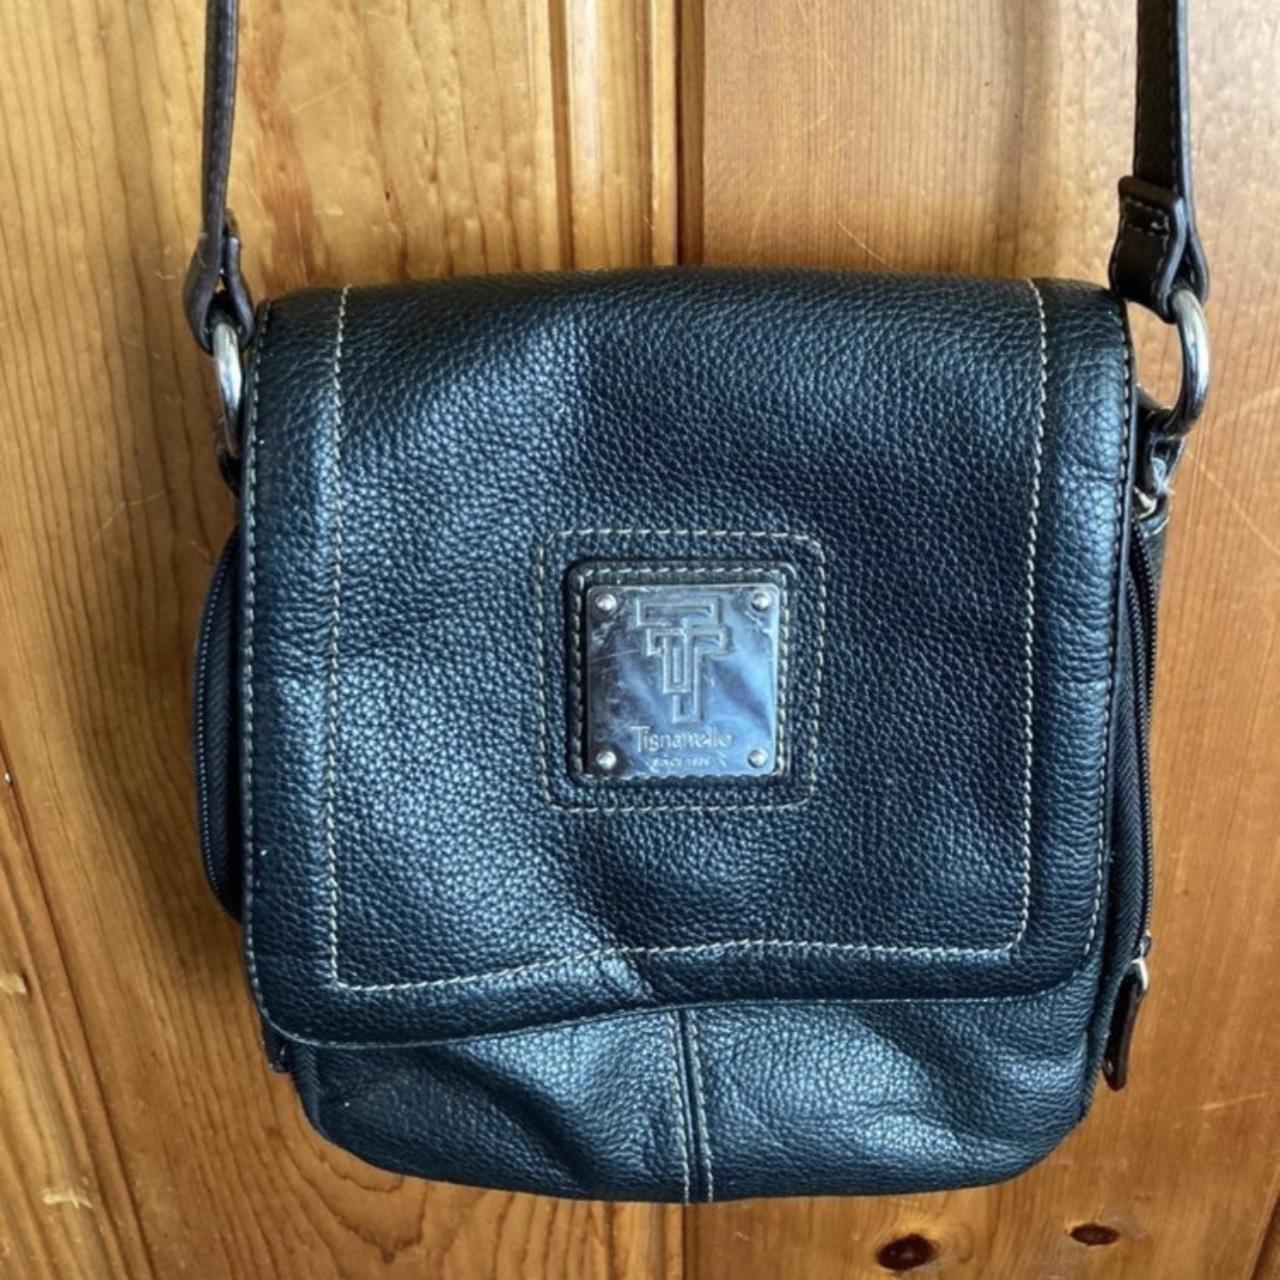 Tignanello Tan Leather Small Crossbody Bag Purse Pockets Zipper Closure |  Purses and bags, Small crossbody bag, Purses